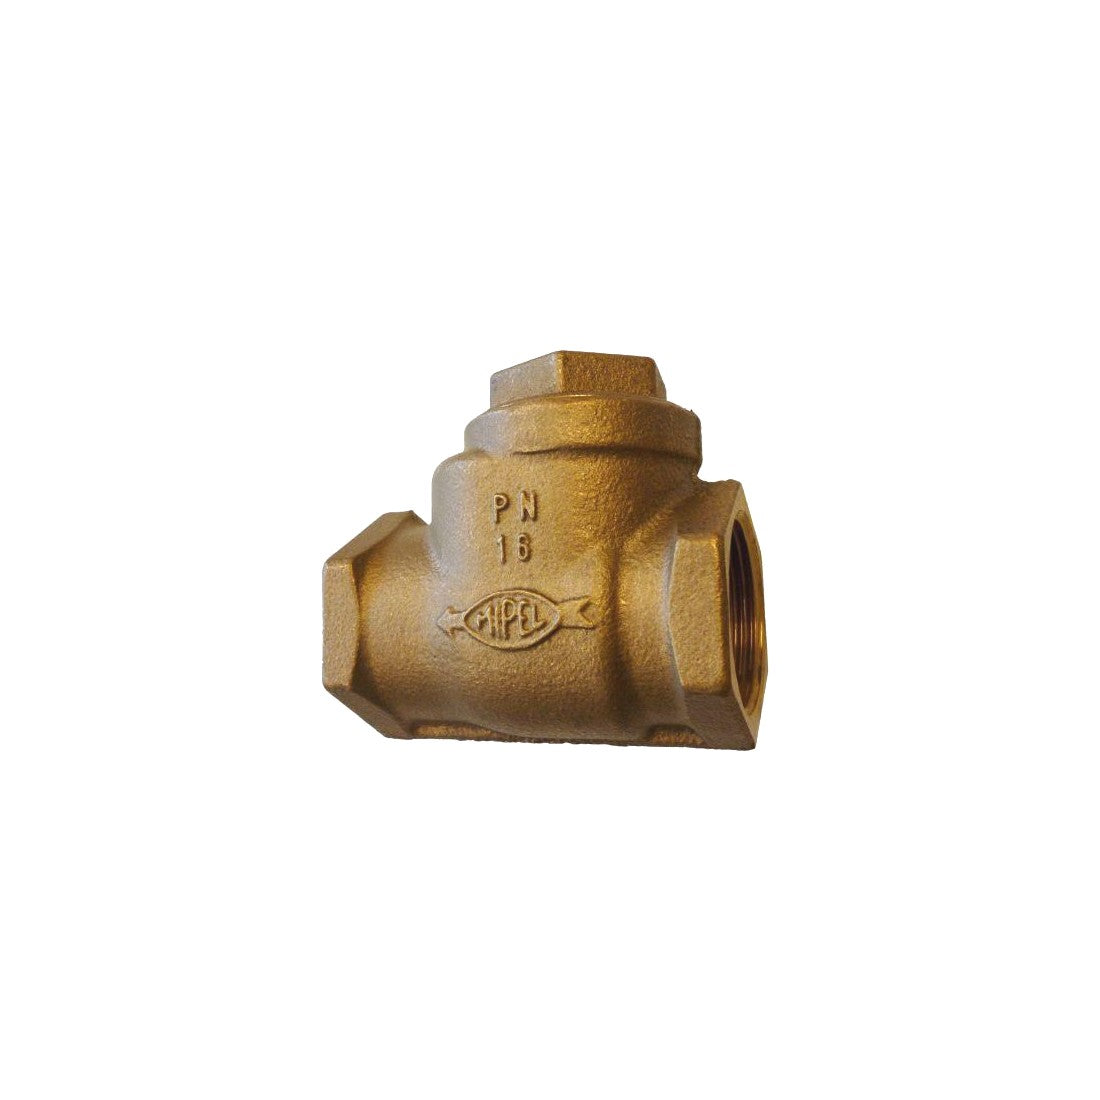 Bronze swing check valve with BSP threads